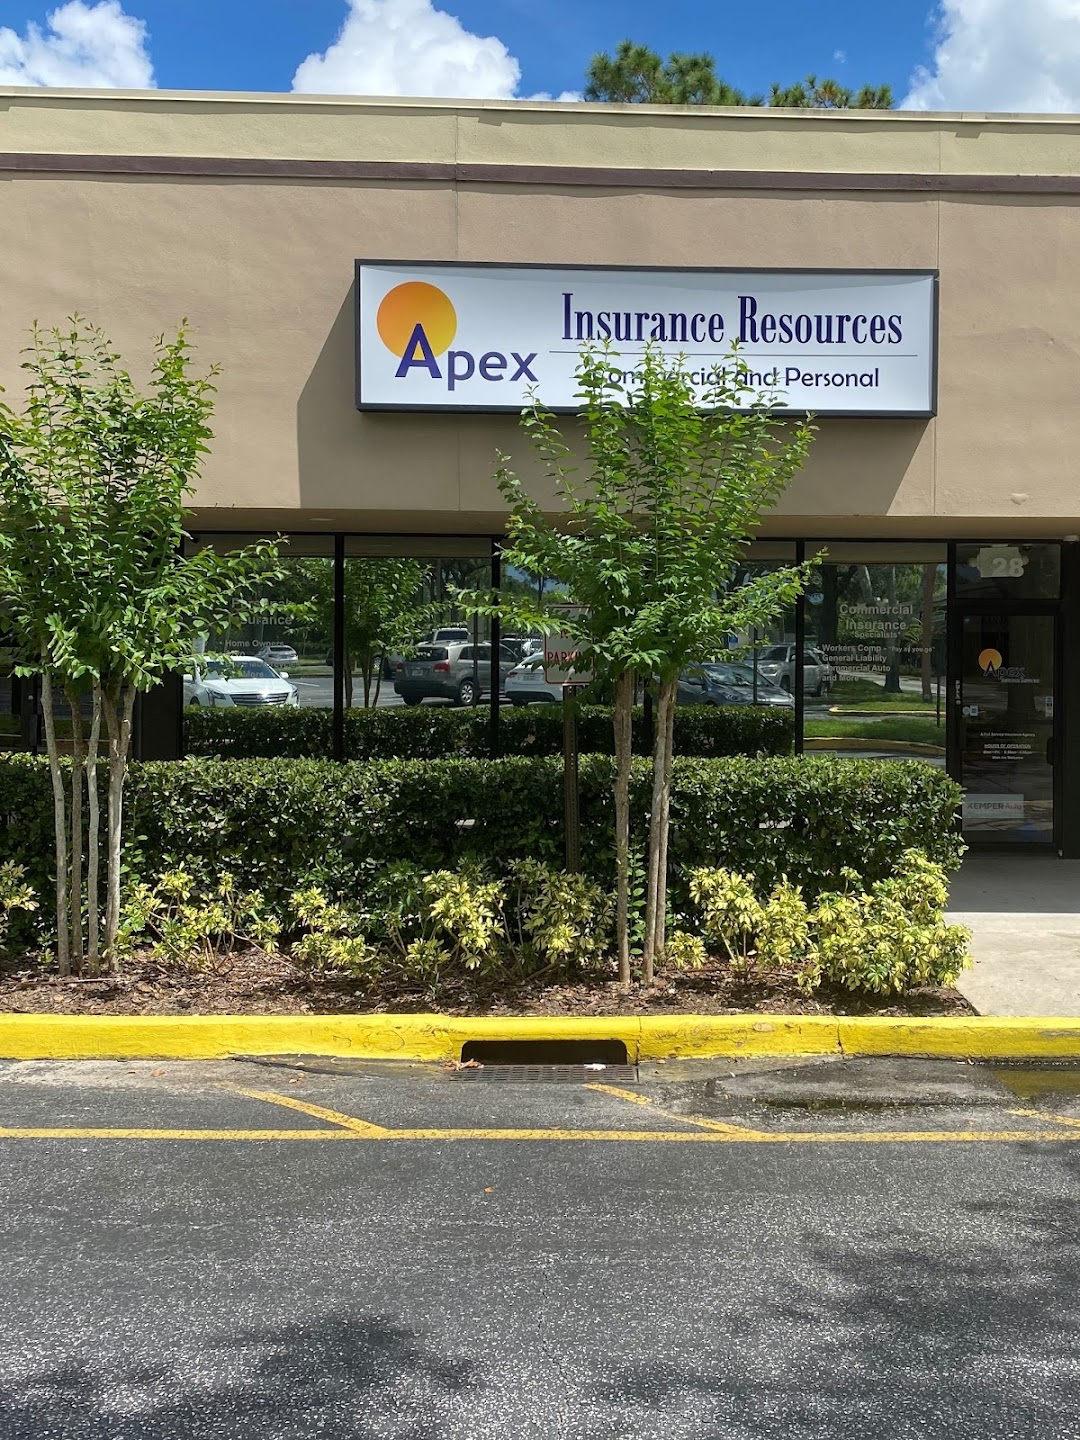 Apex Insurance Resources